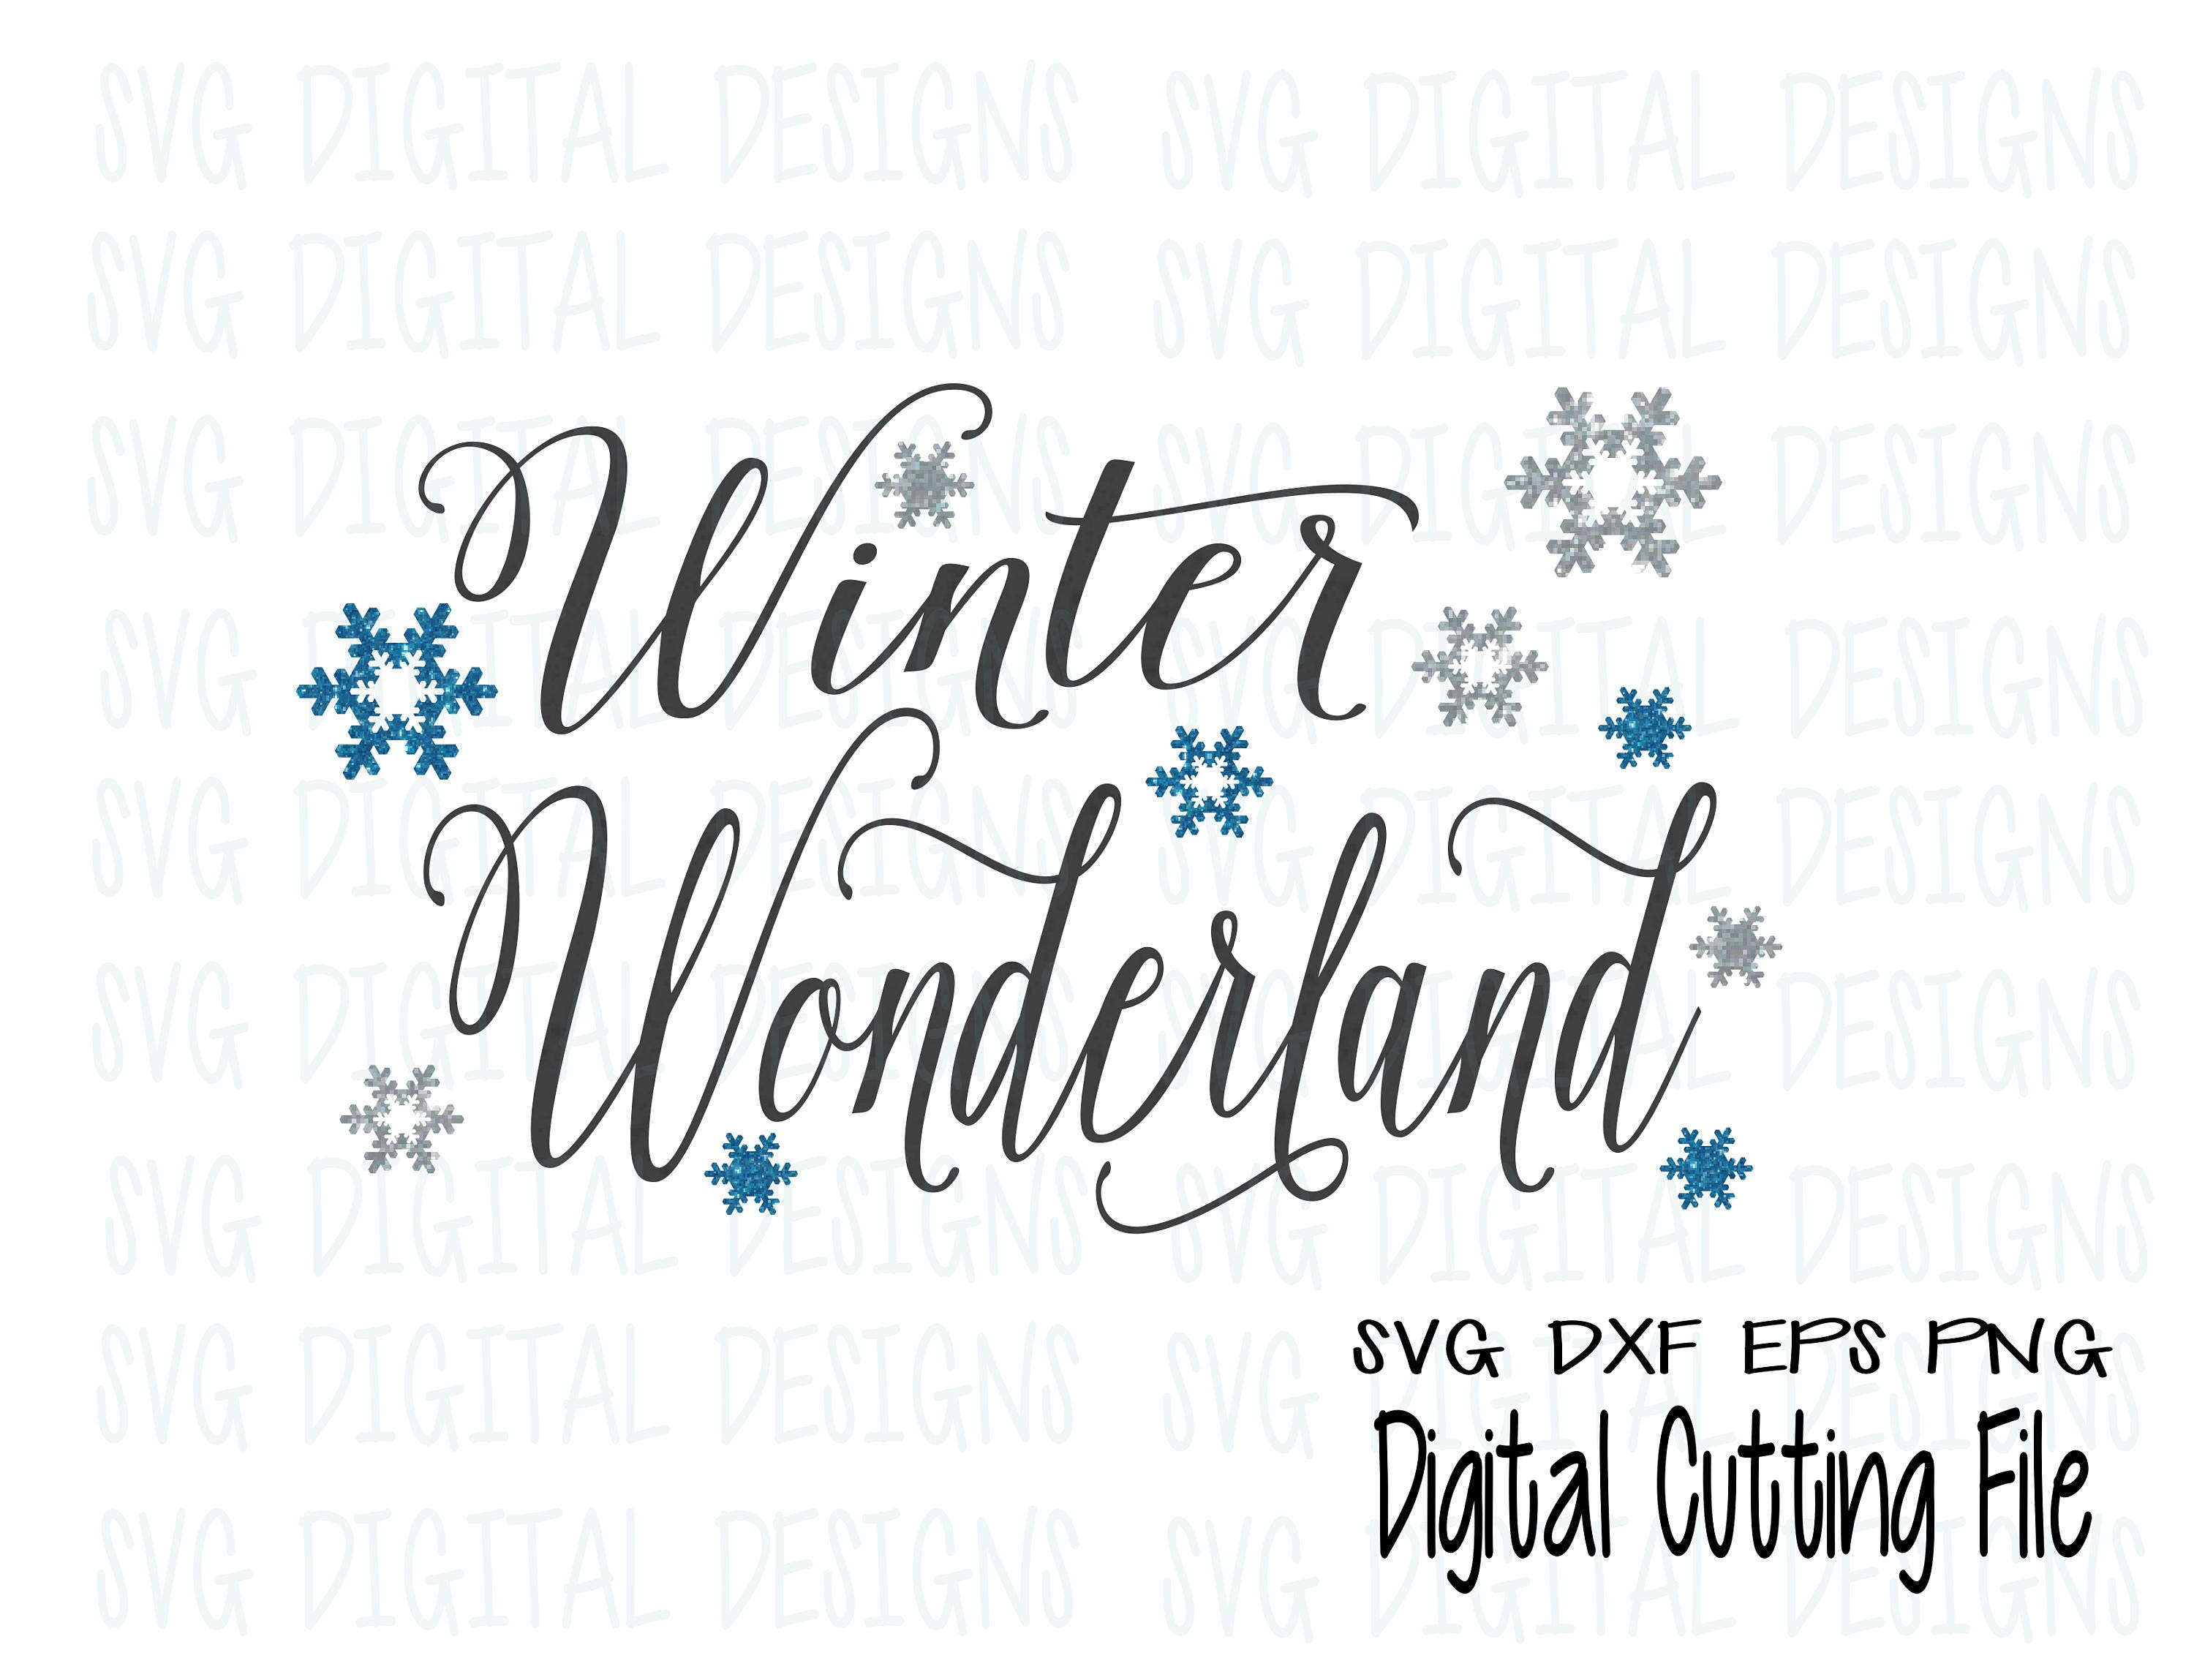 Download Winter Wonderland SVG Cut File DesignChristmas Quote Svg Dxf